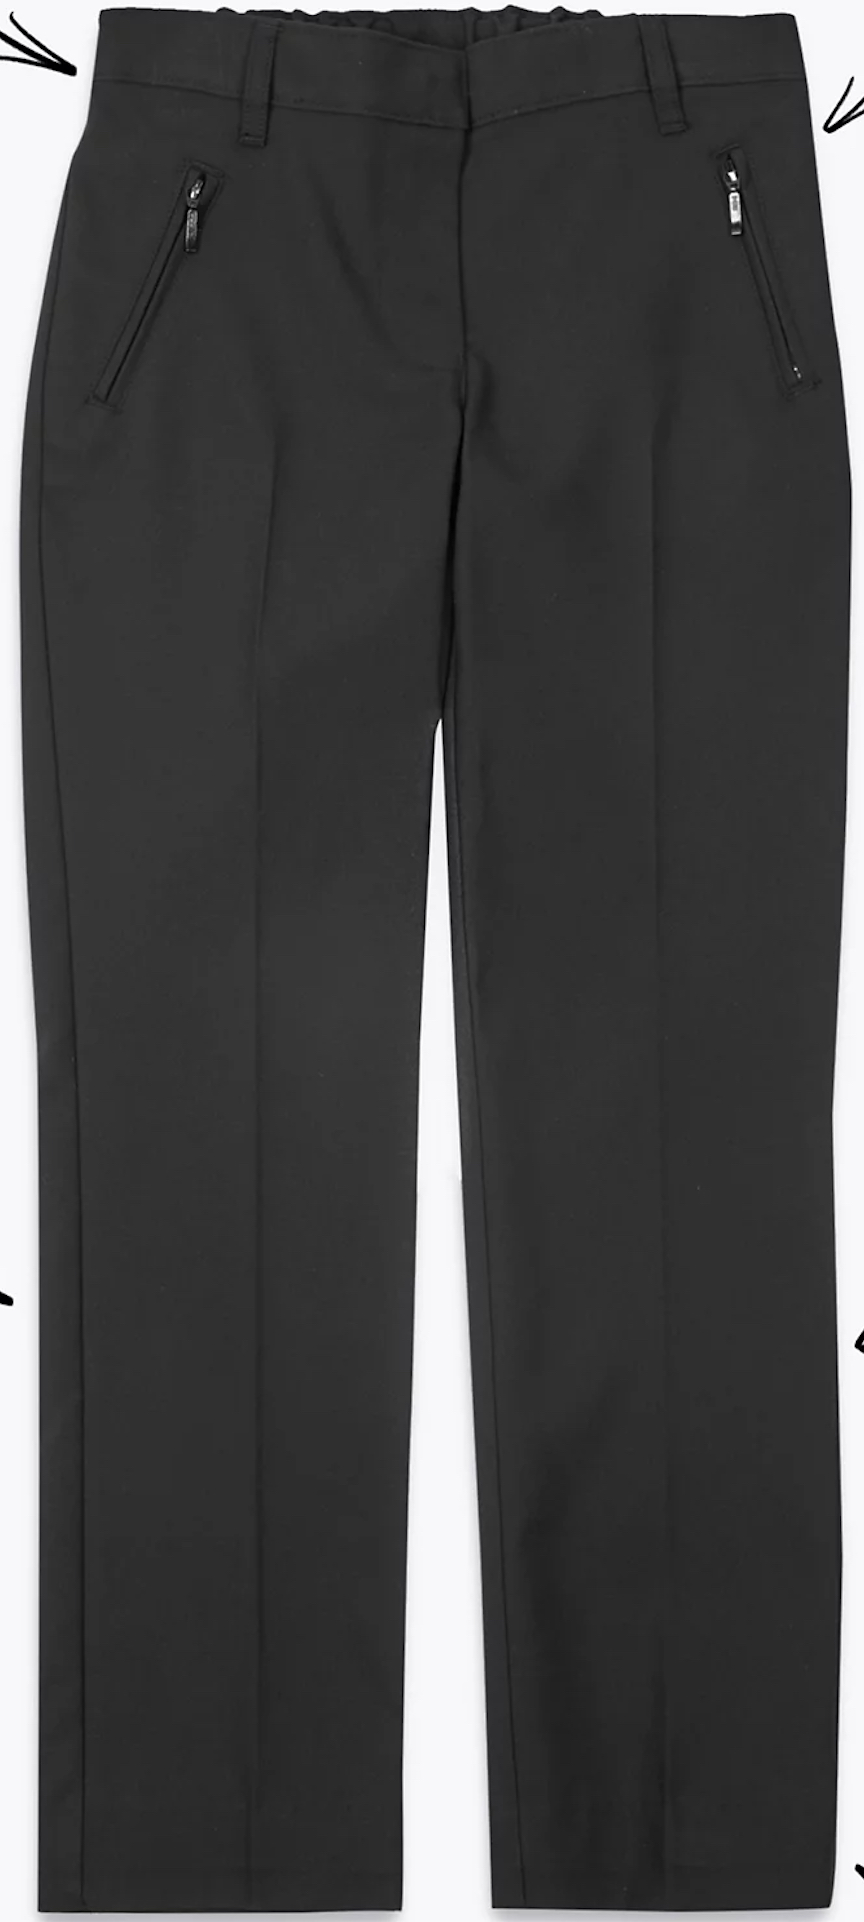 Girls' Grey Trousers, Adjustable Waist, Mock Fly, Zipped Pockets 4-5 Y